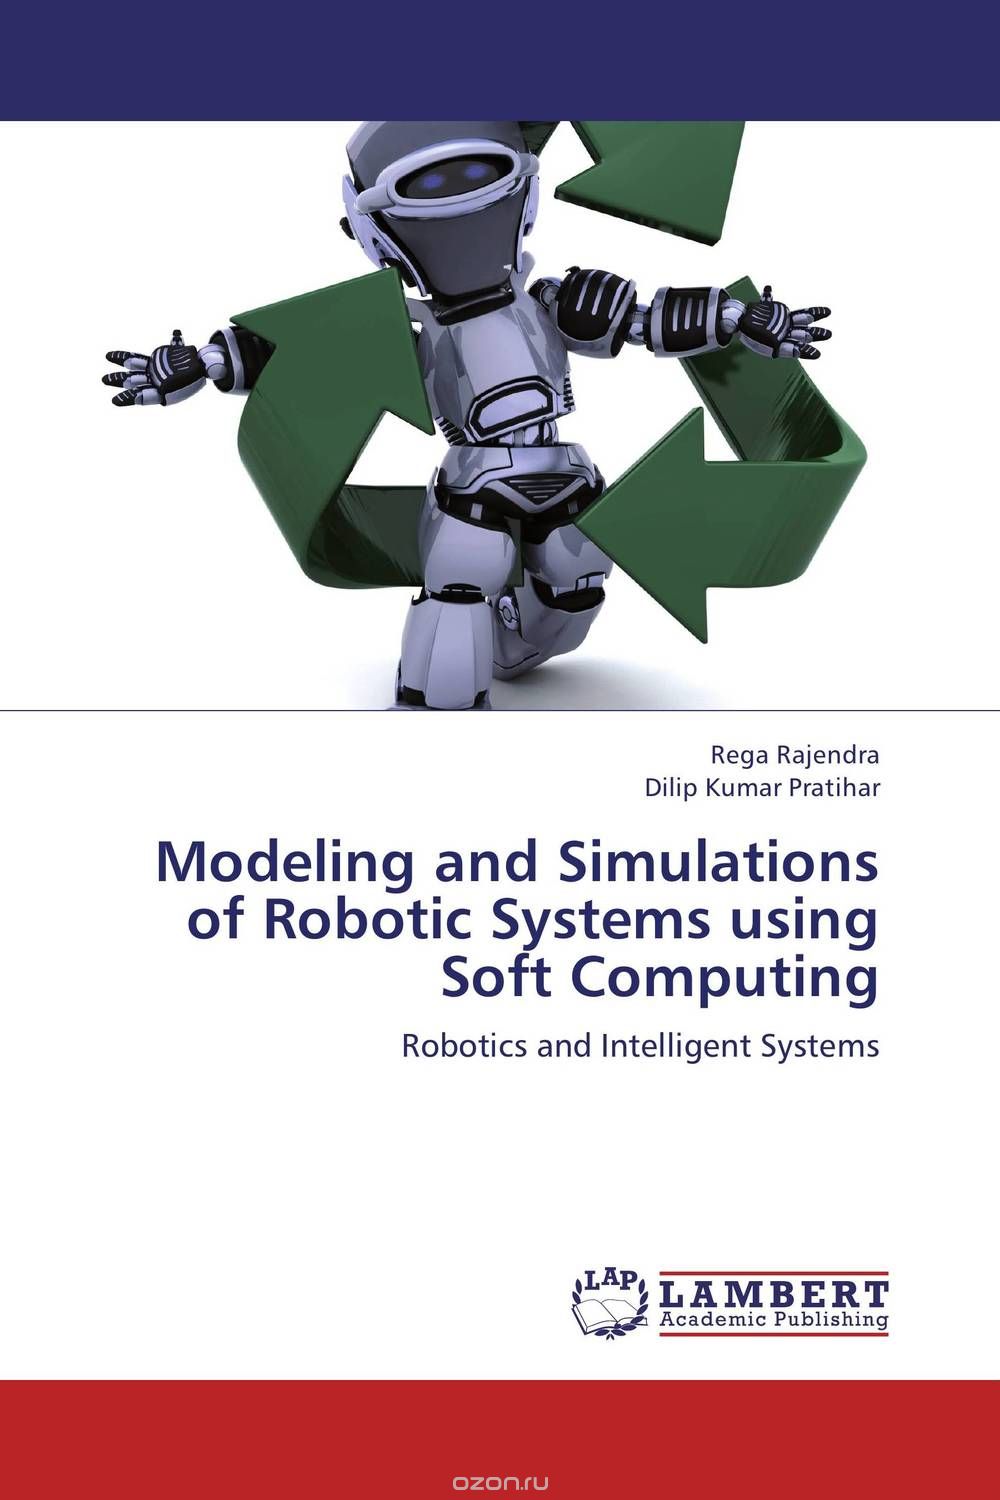 Скачать книгу "Modeling and Simulations of Robotic Systems using Soft Computing"